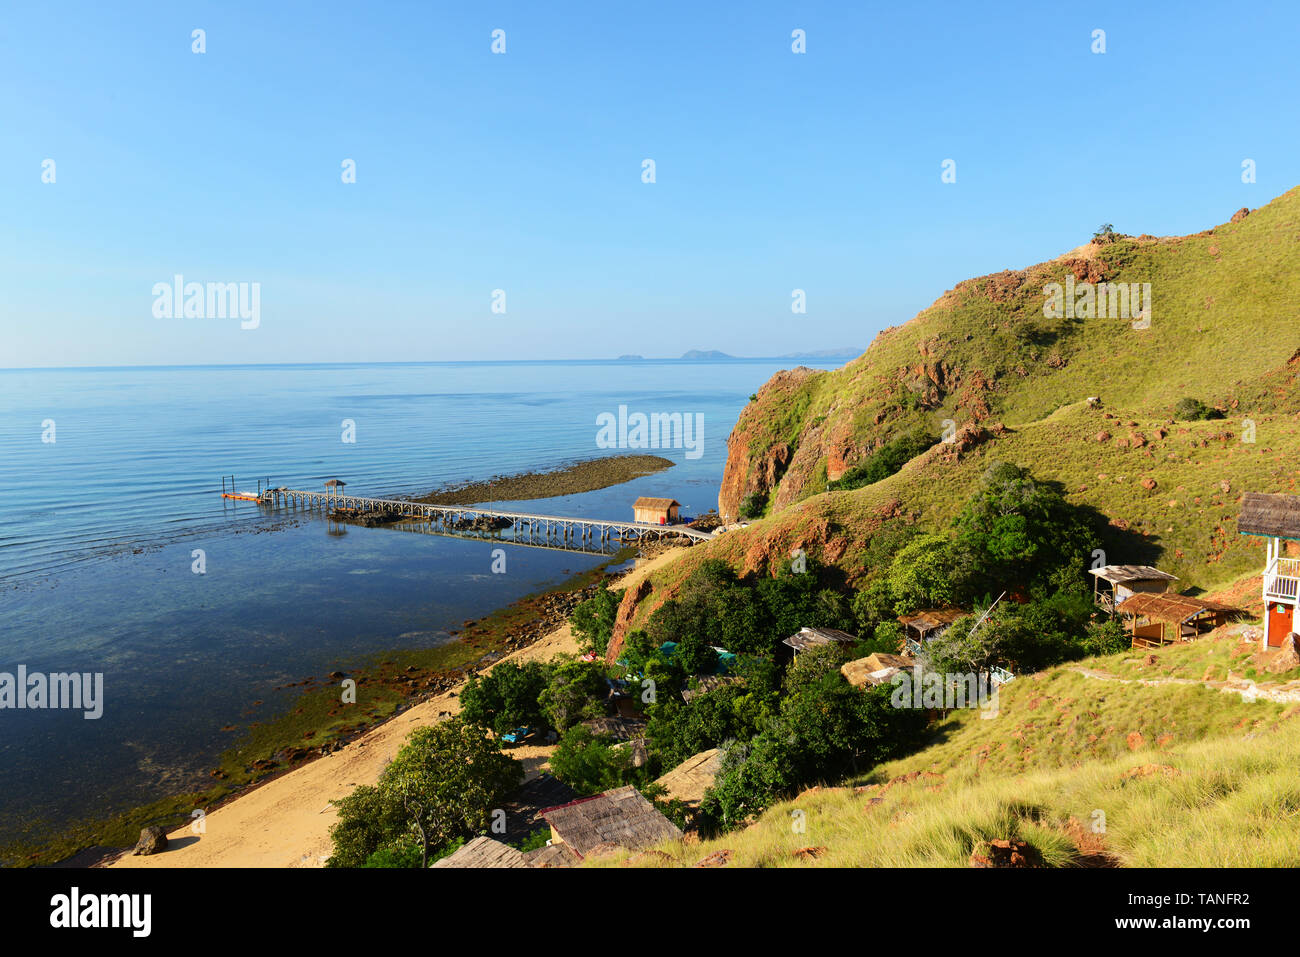 Views of the X Pirates campe on Sebayur Besar island in  Komodo N. P. Stock Photo